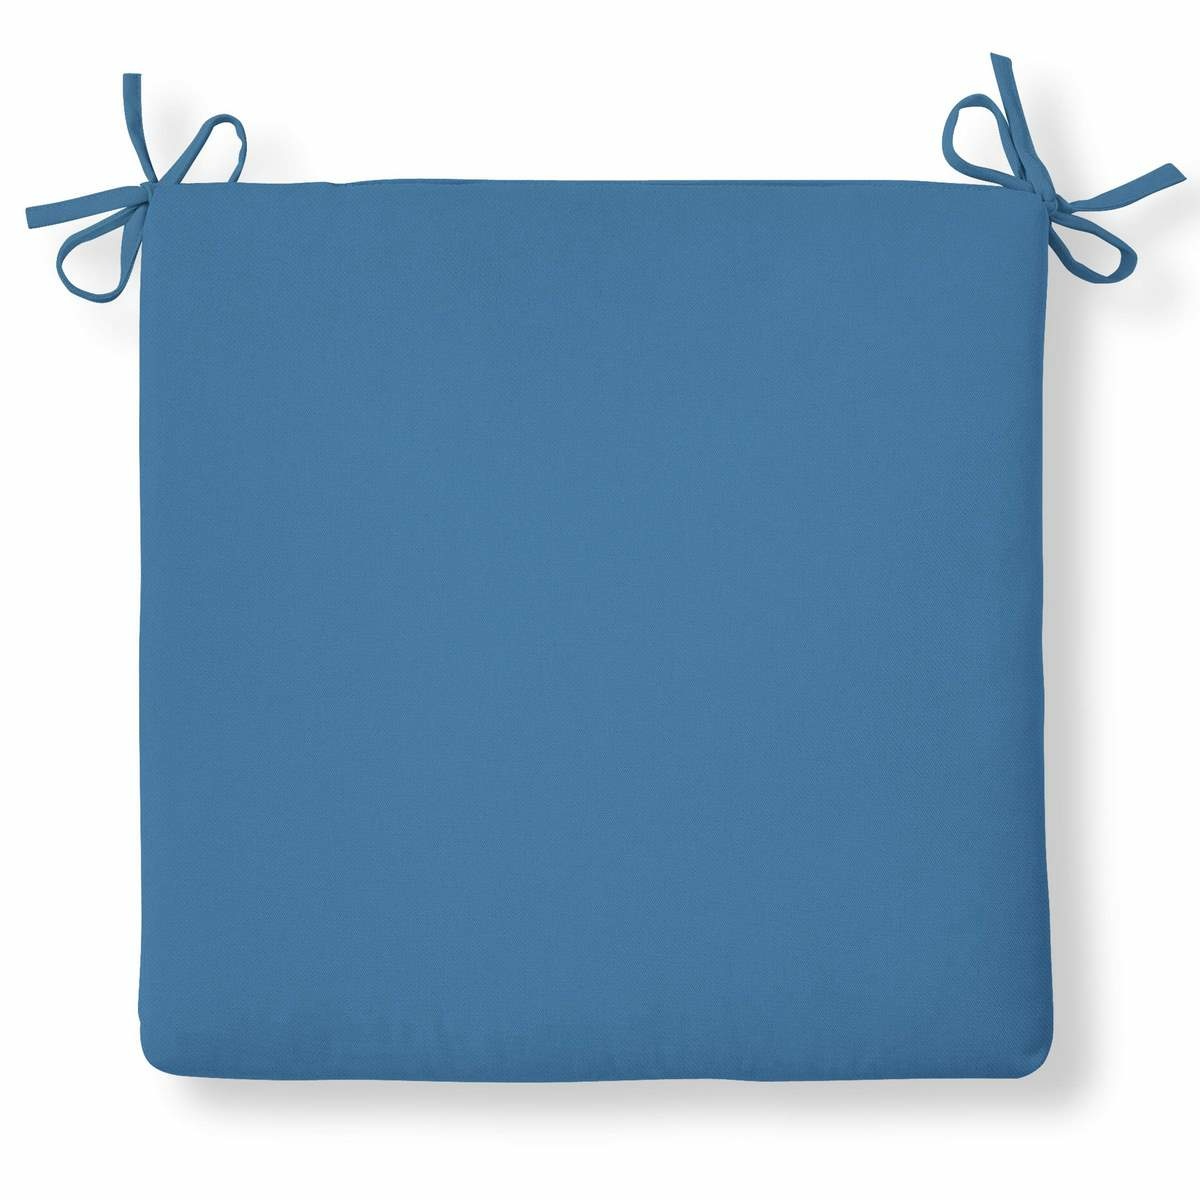 Poza Perna sezut Domarex Oxford Mia impermeabil, albastru, 40 x 40 cm